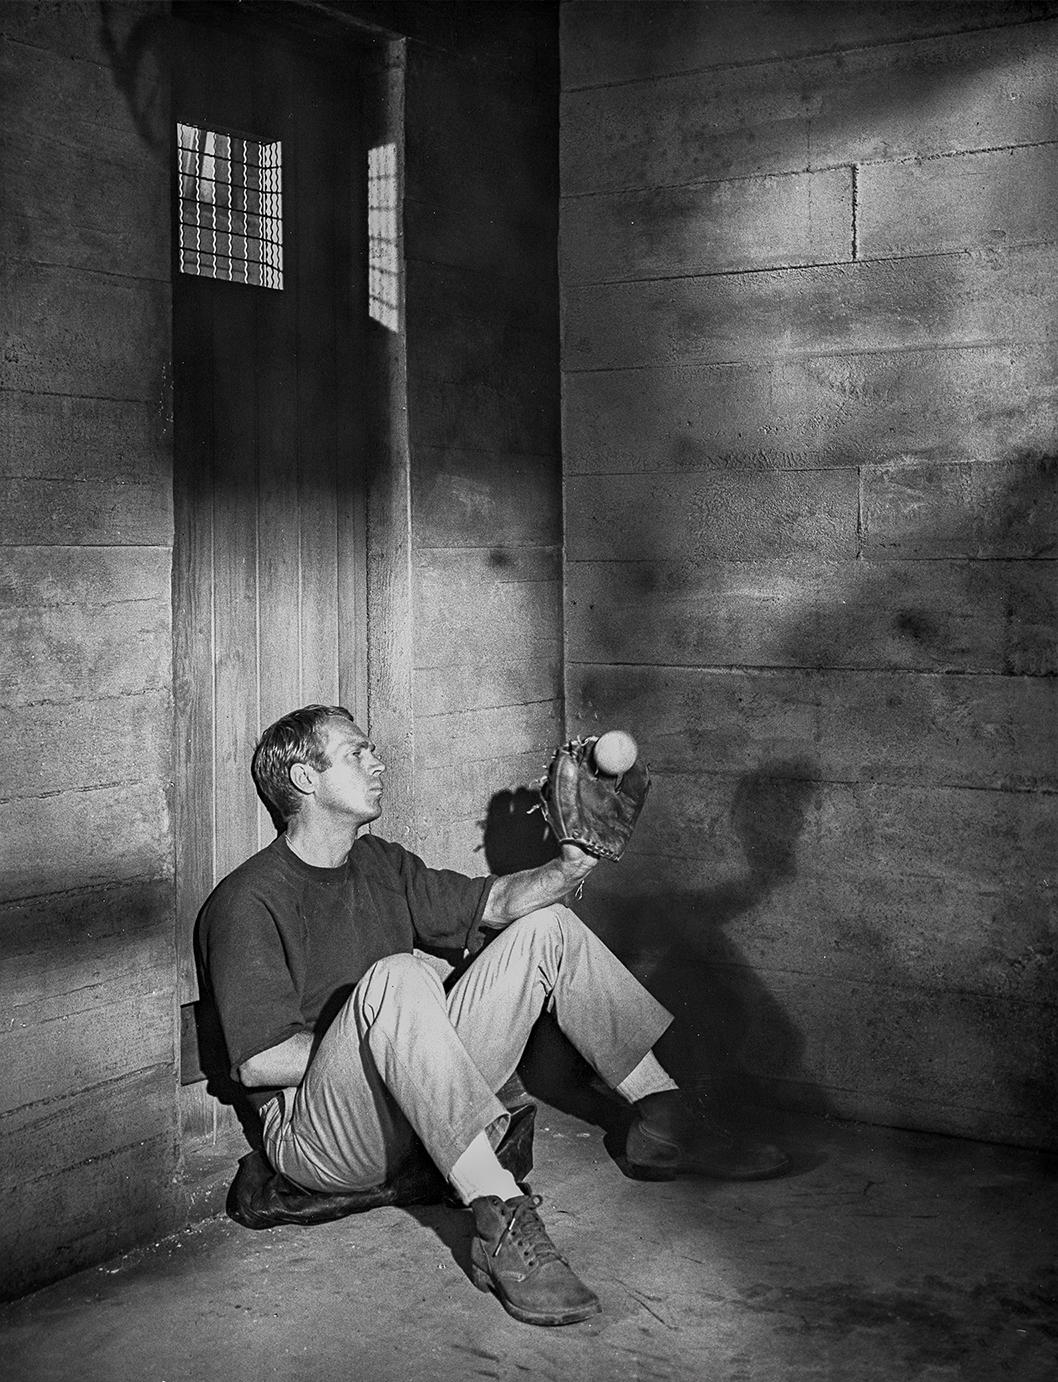 Lothar Winkler Portrait Photograph - Steve McQueen "The Great Escape"